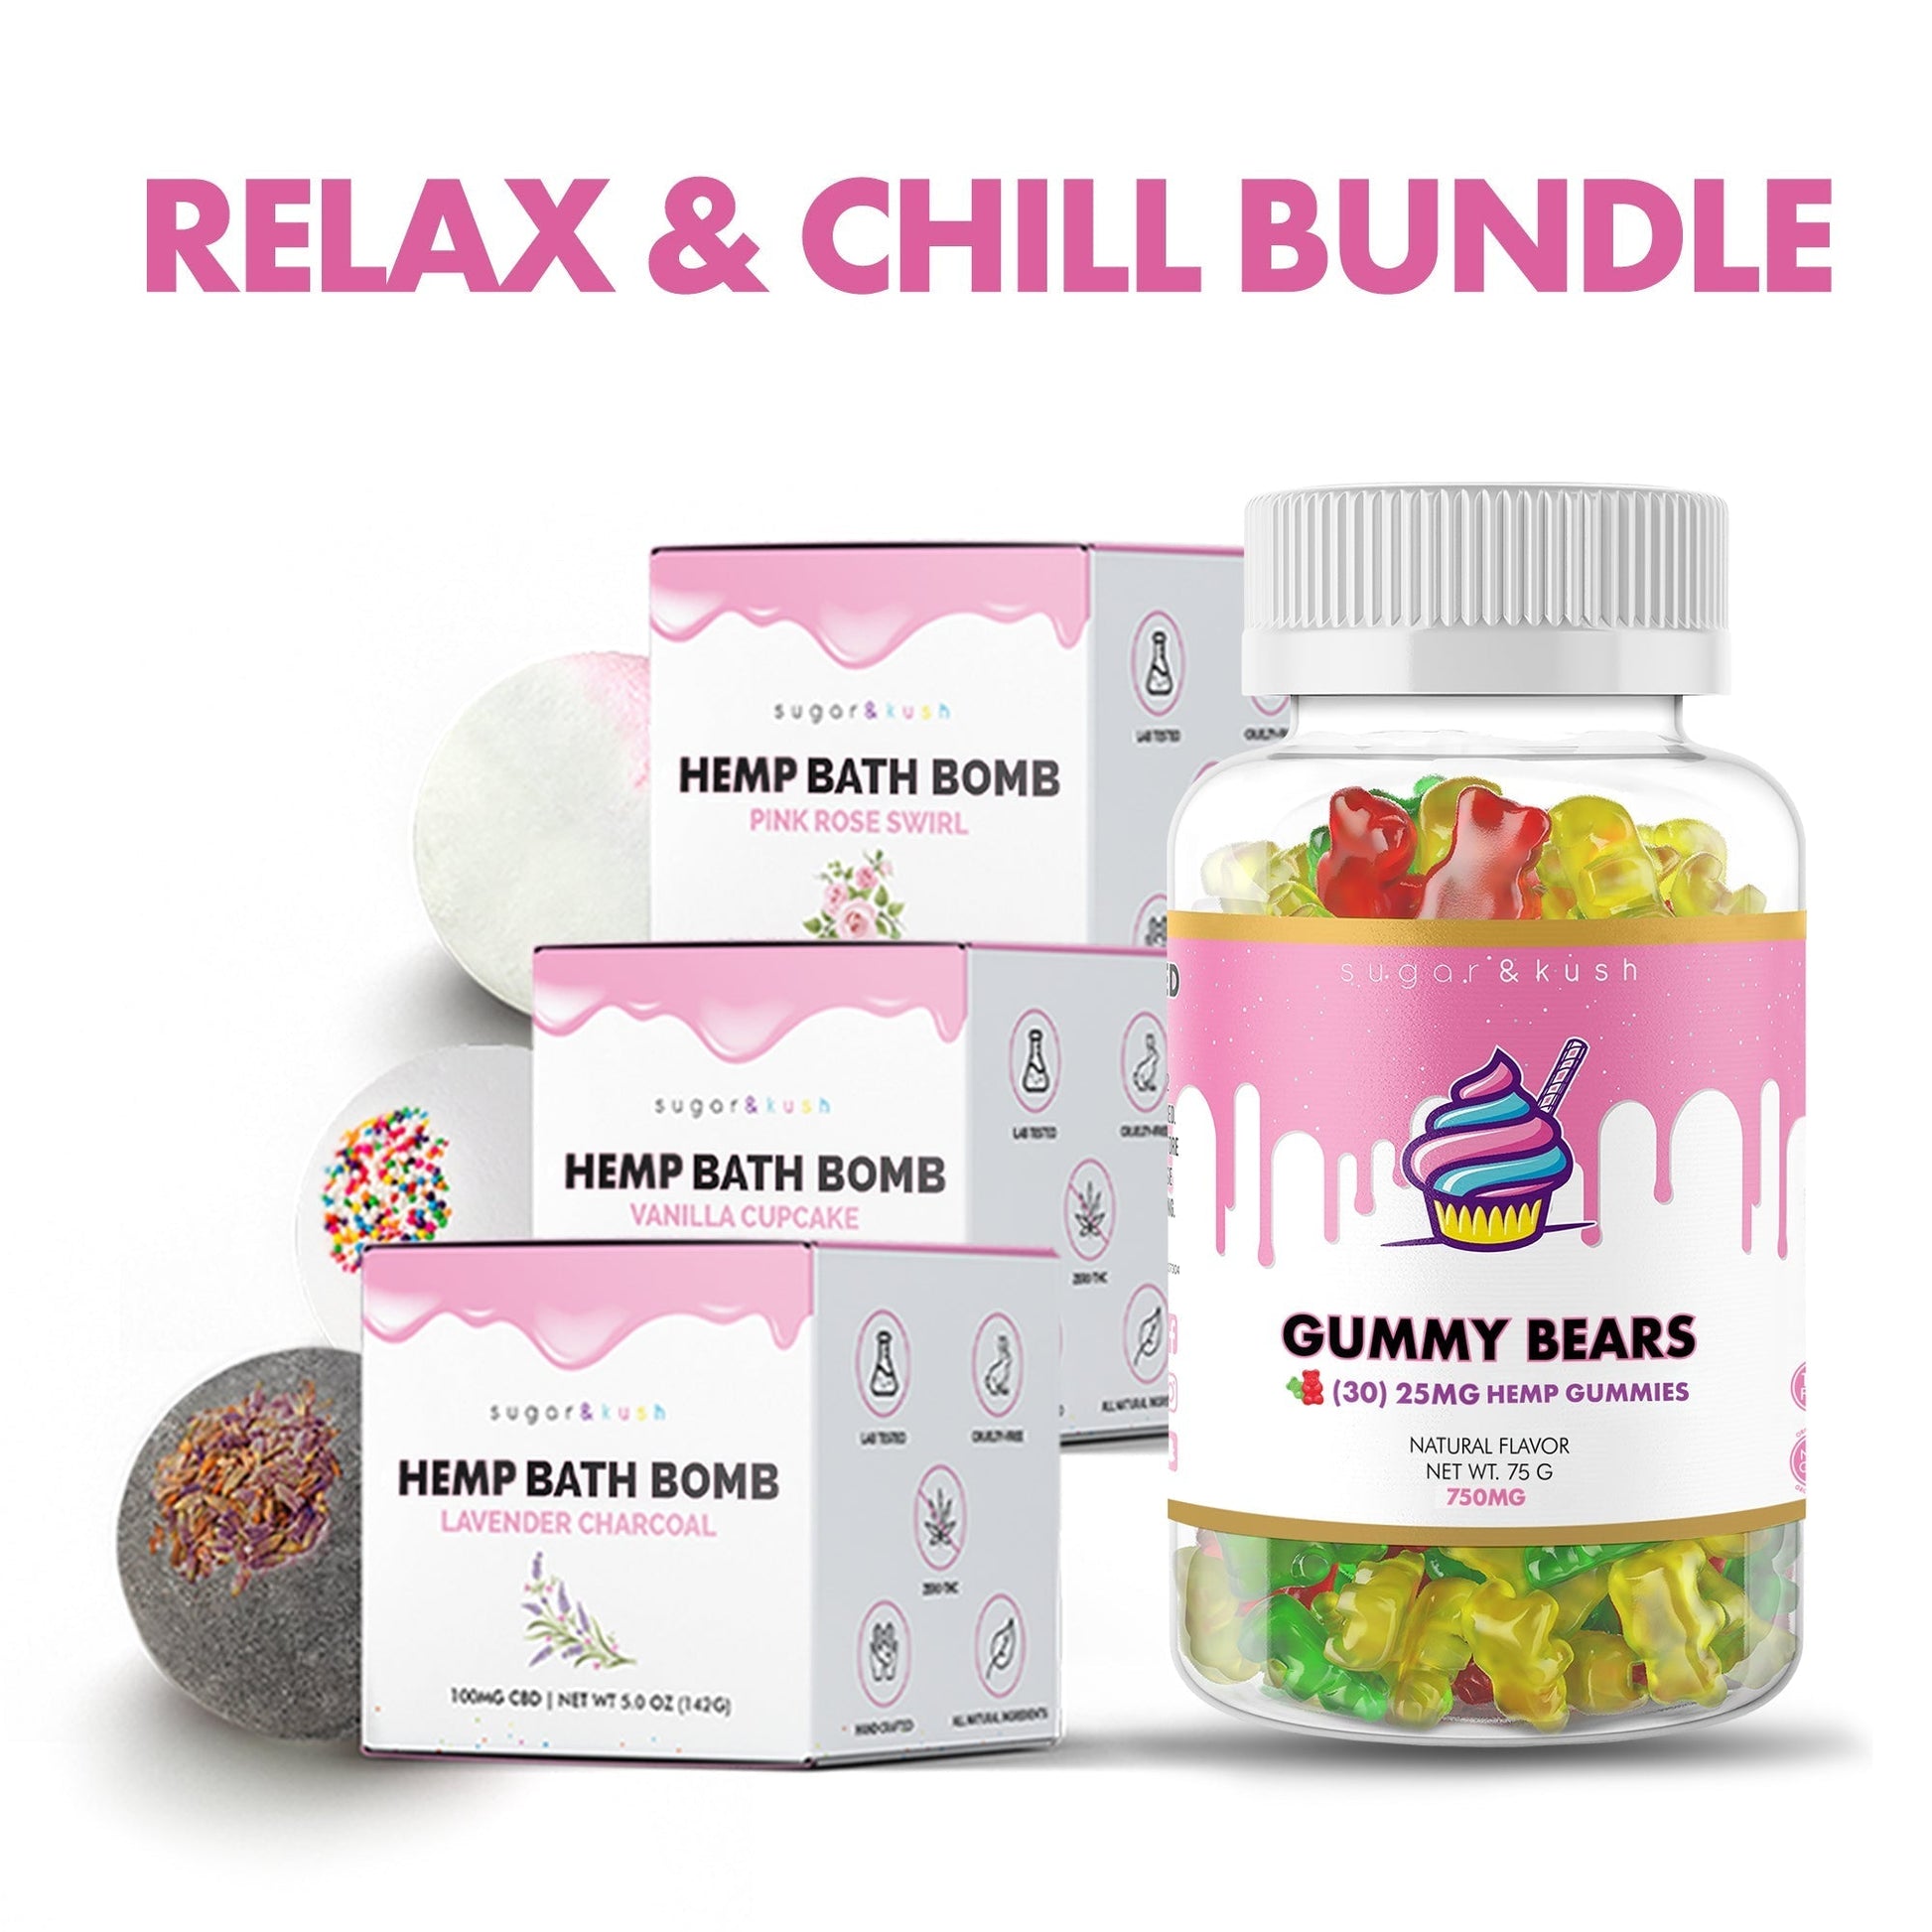 30% OFF Spa Certificate "Relax & Chill Bundle" - Bath Bomb Variety Pack + Gummies bundle S&K Bundles 